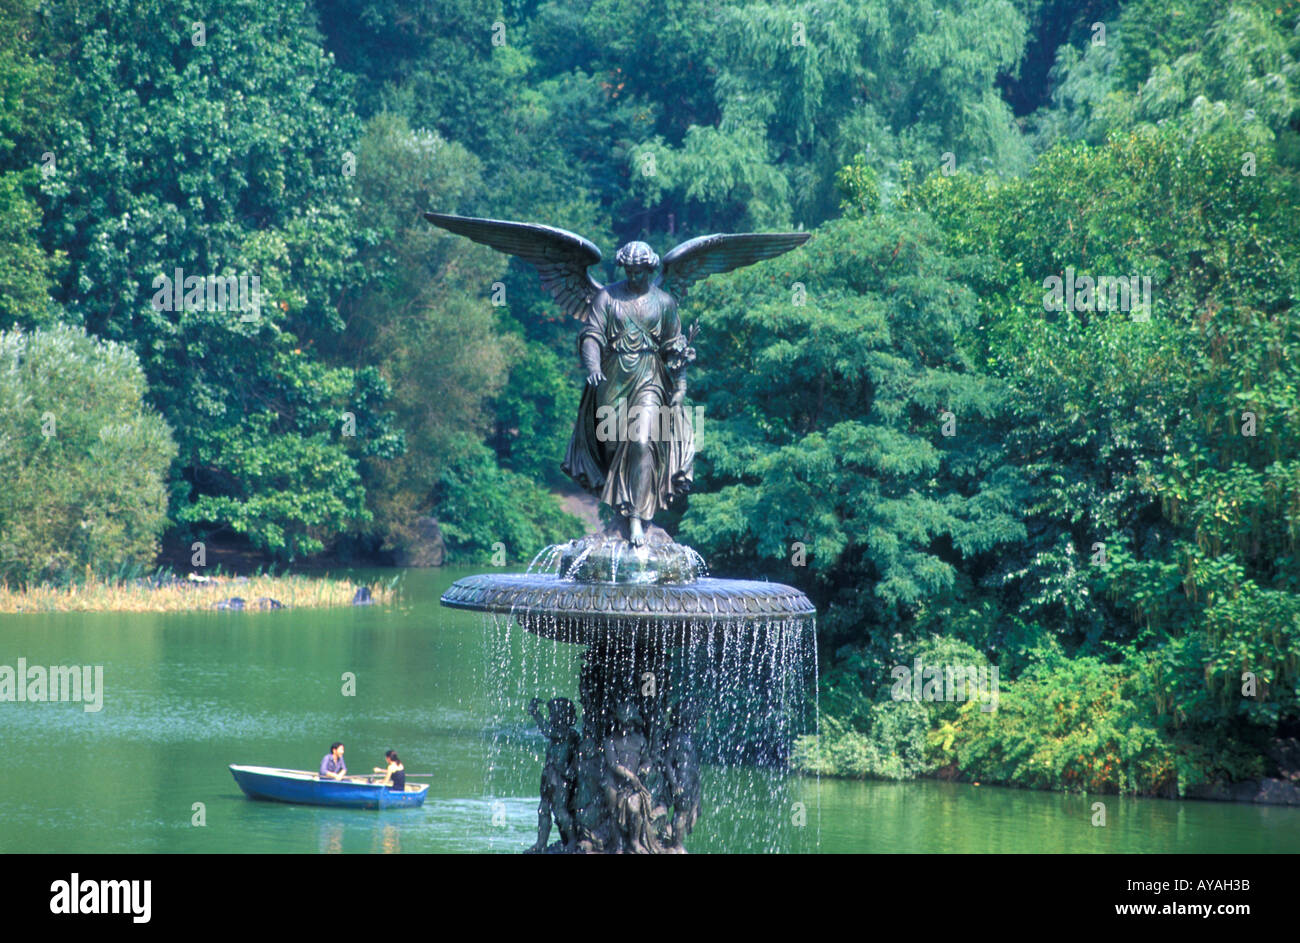 Central Park Angel Statue Manhattan New York City United States of America Stock Photo